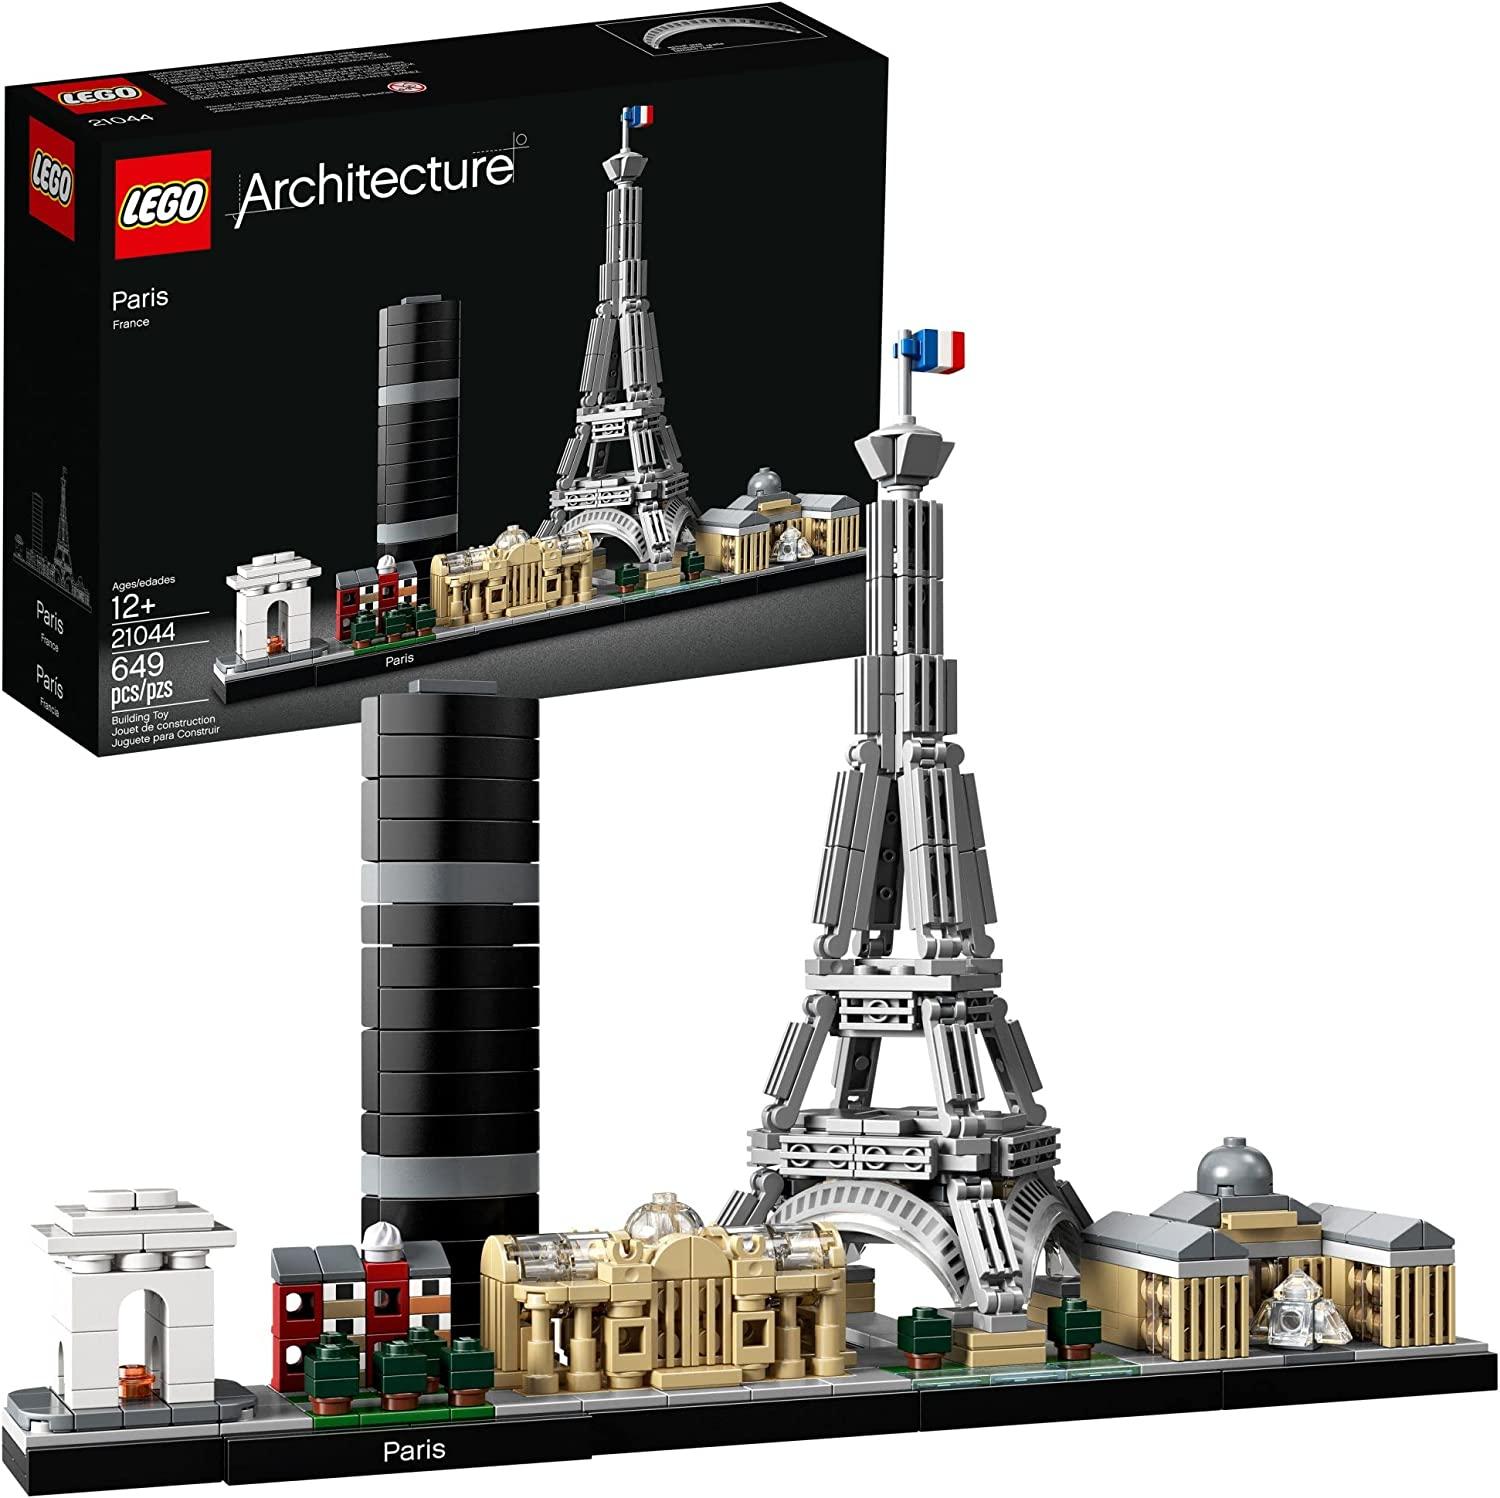 Lego Architecture Paris Skyline Building Kit for $39.99 Shipped